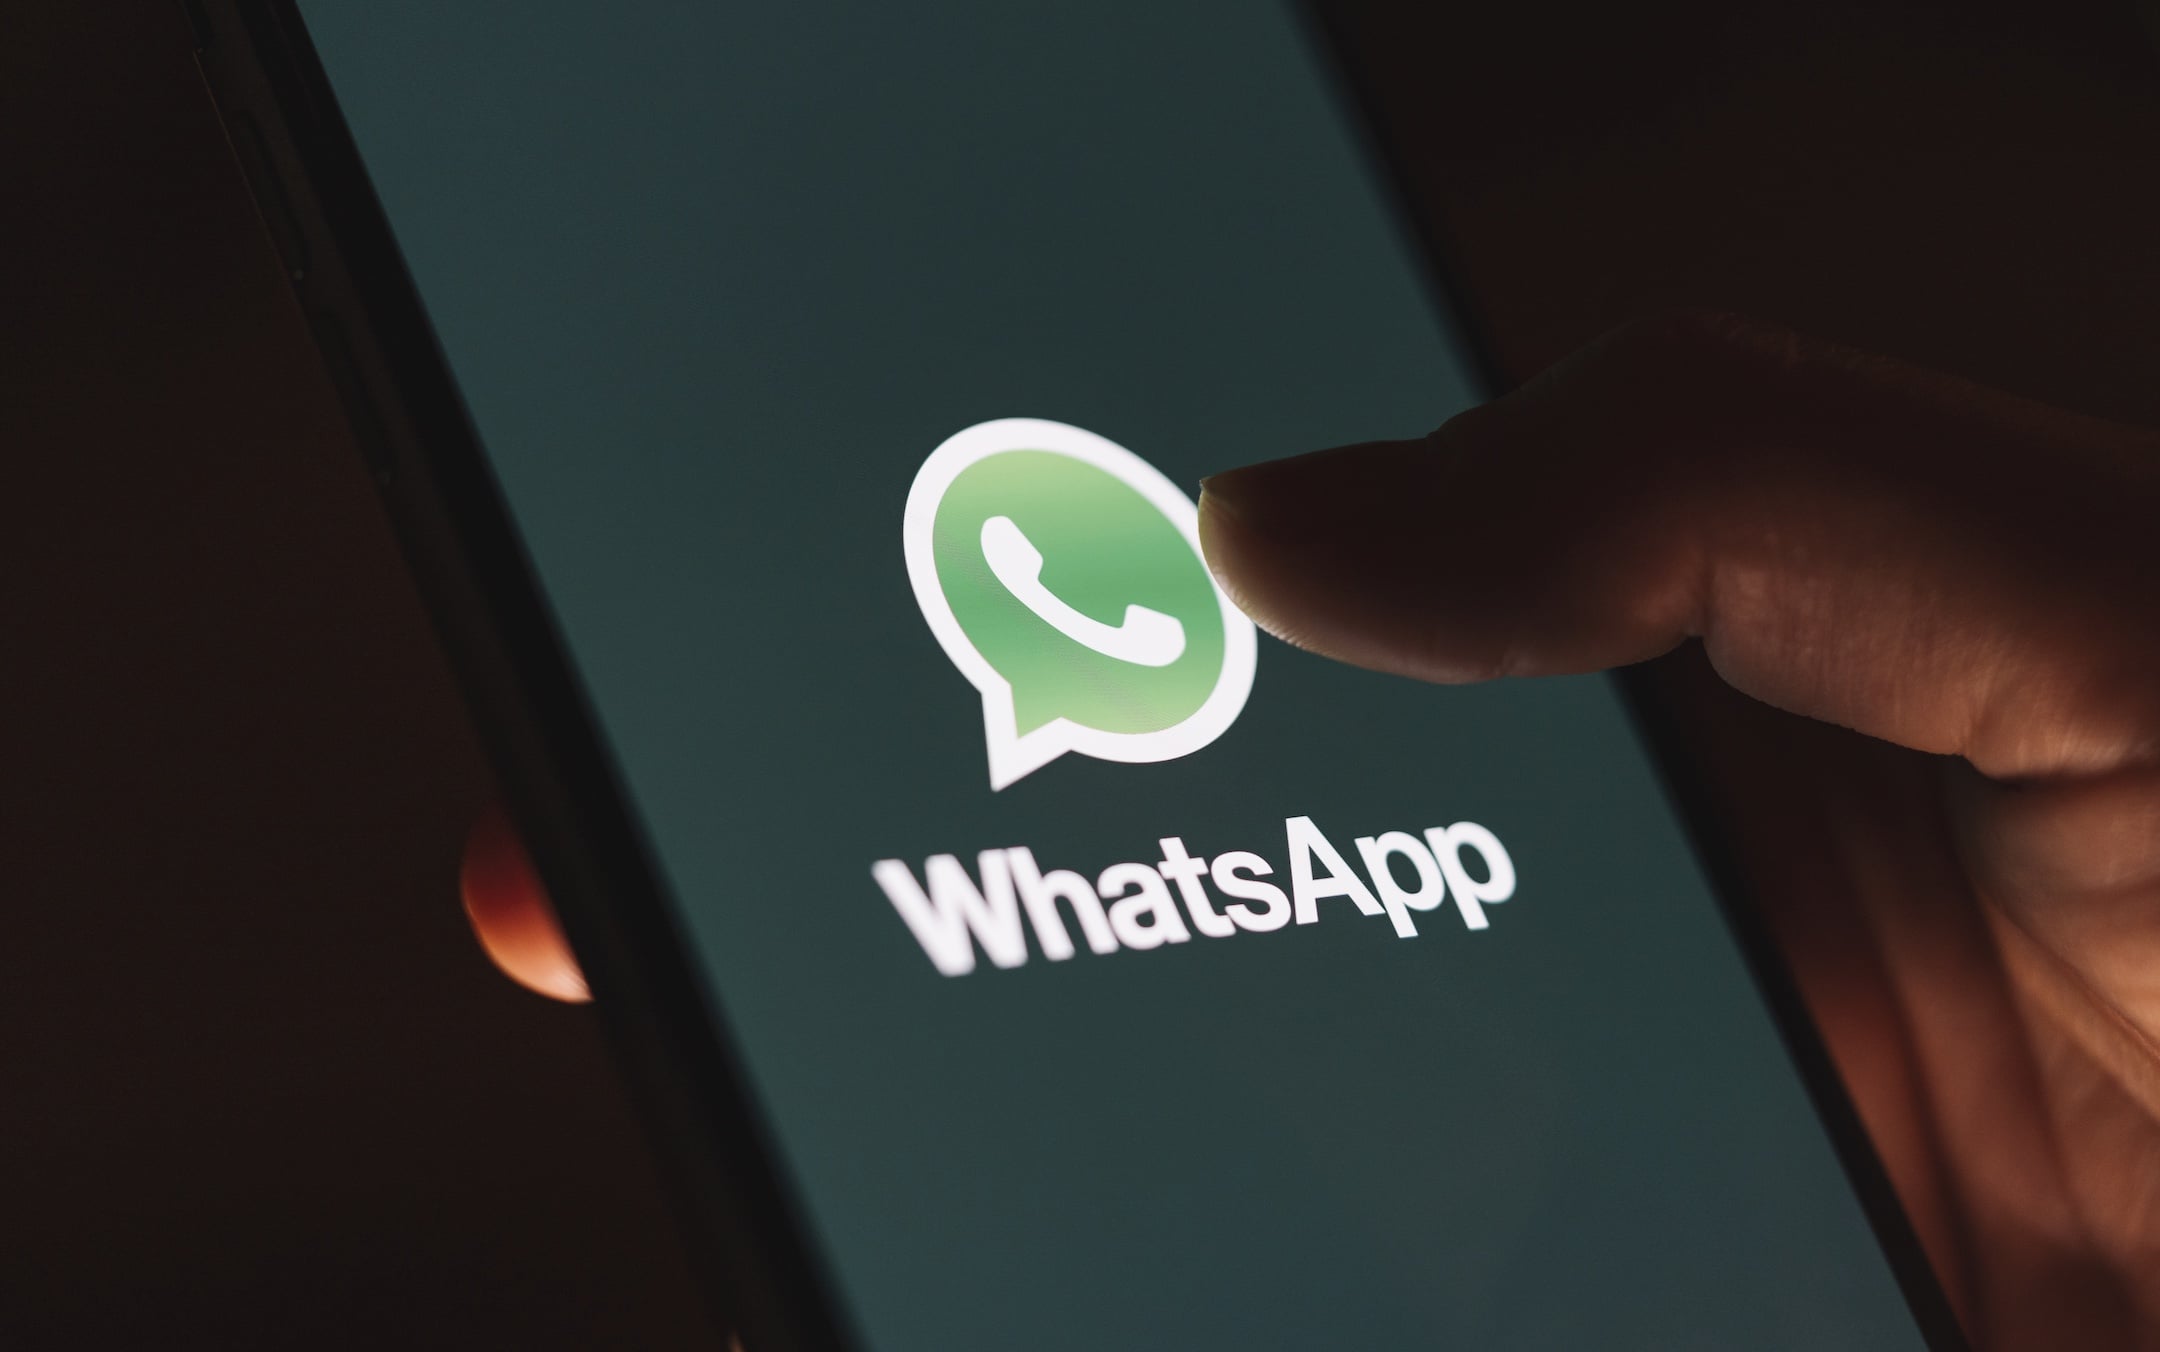 Whatsapp tehlikeyi duyurdu: Her an yasaklanabilir